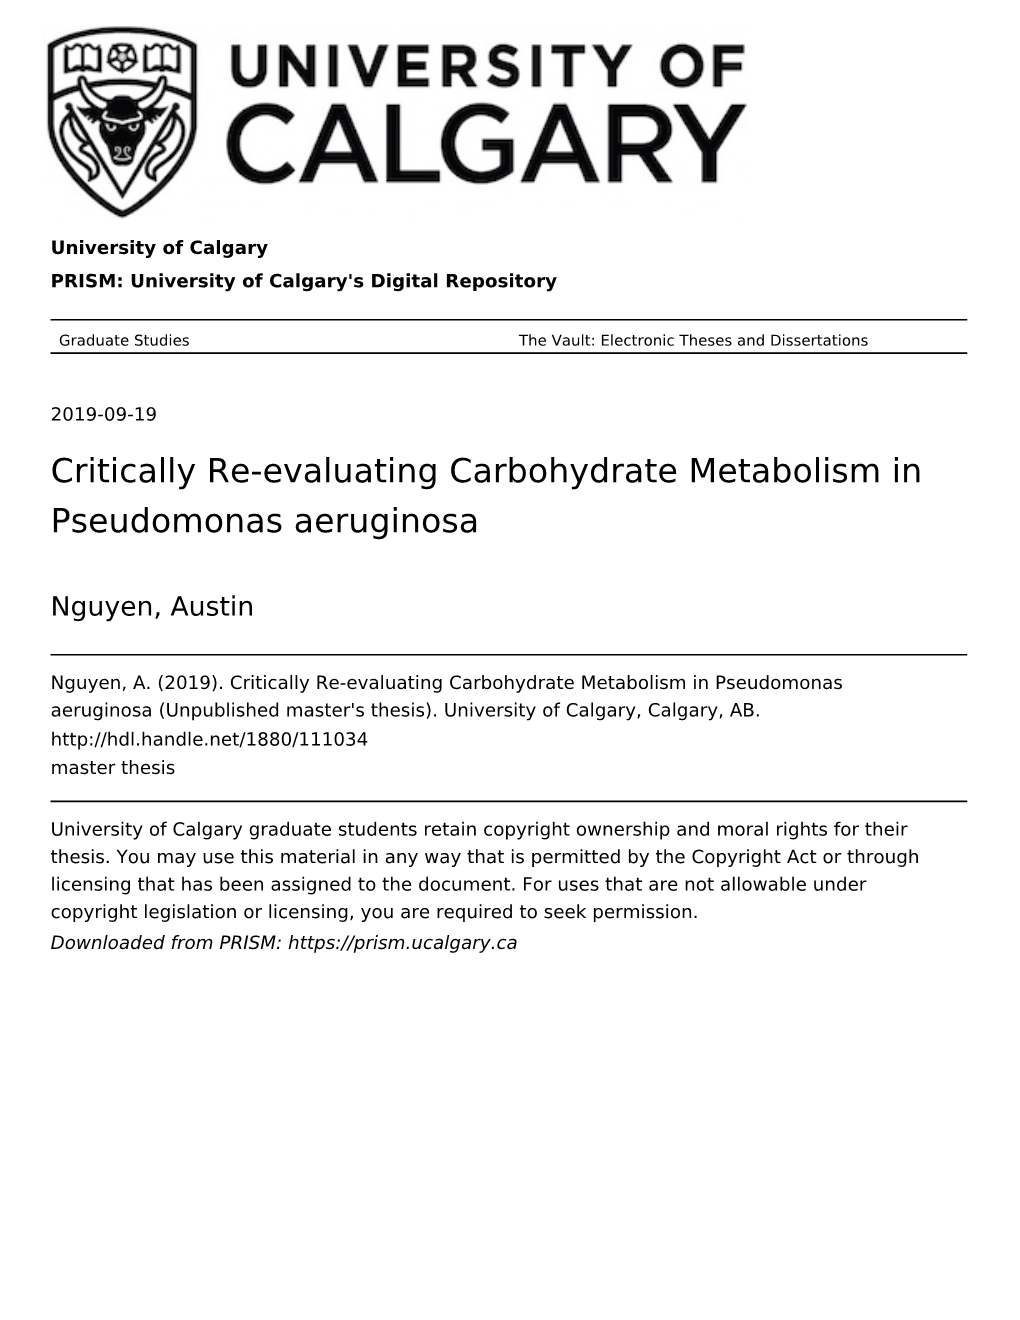 Critically Re-Evaluating Carbohydrate Metabolism in Pseudomonas Aeruginosa